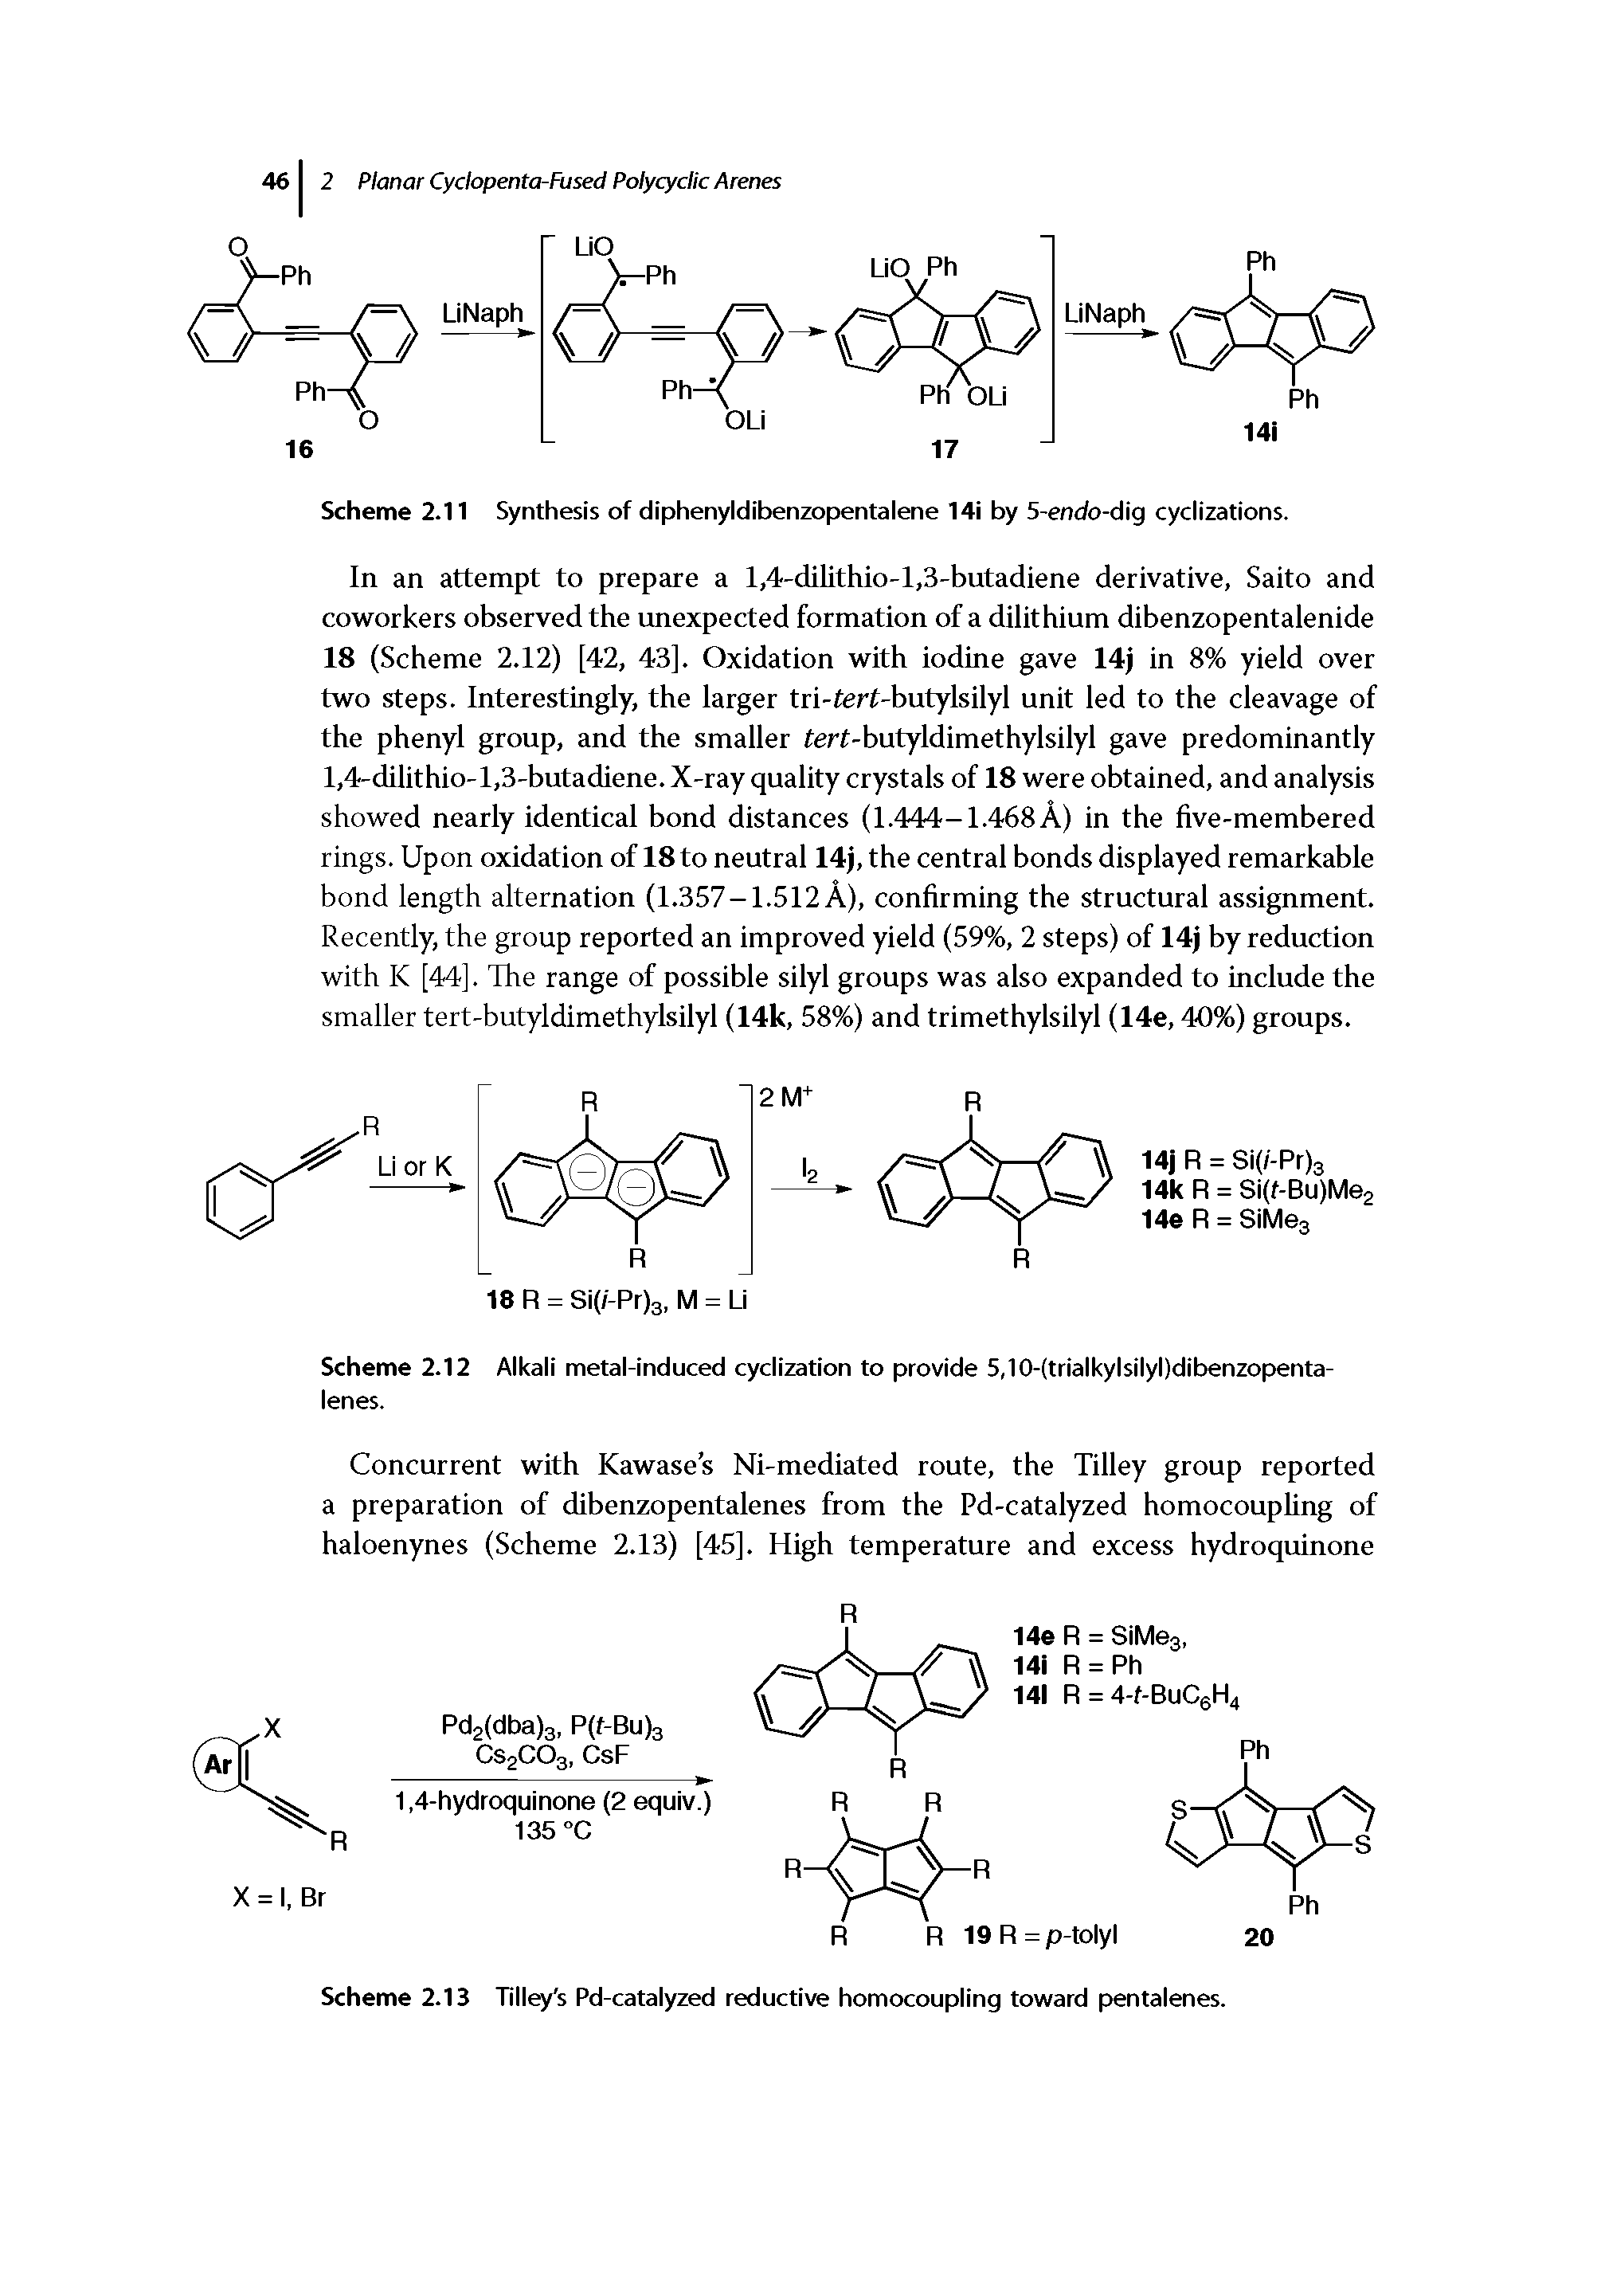 Scheme 2.12 Alkali metal-induced cyclization to provide 5,10-(trialkylsilyl)dibenzopenta-lenes.